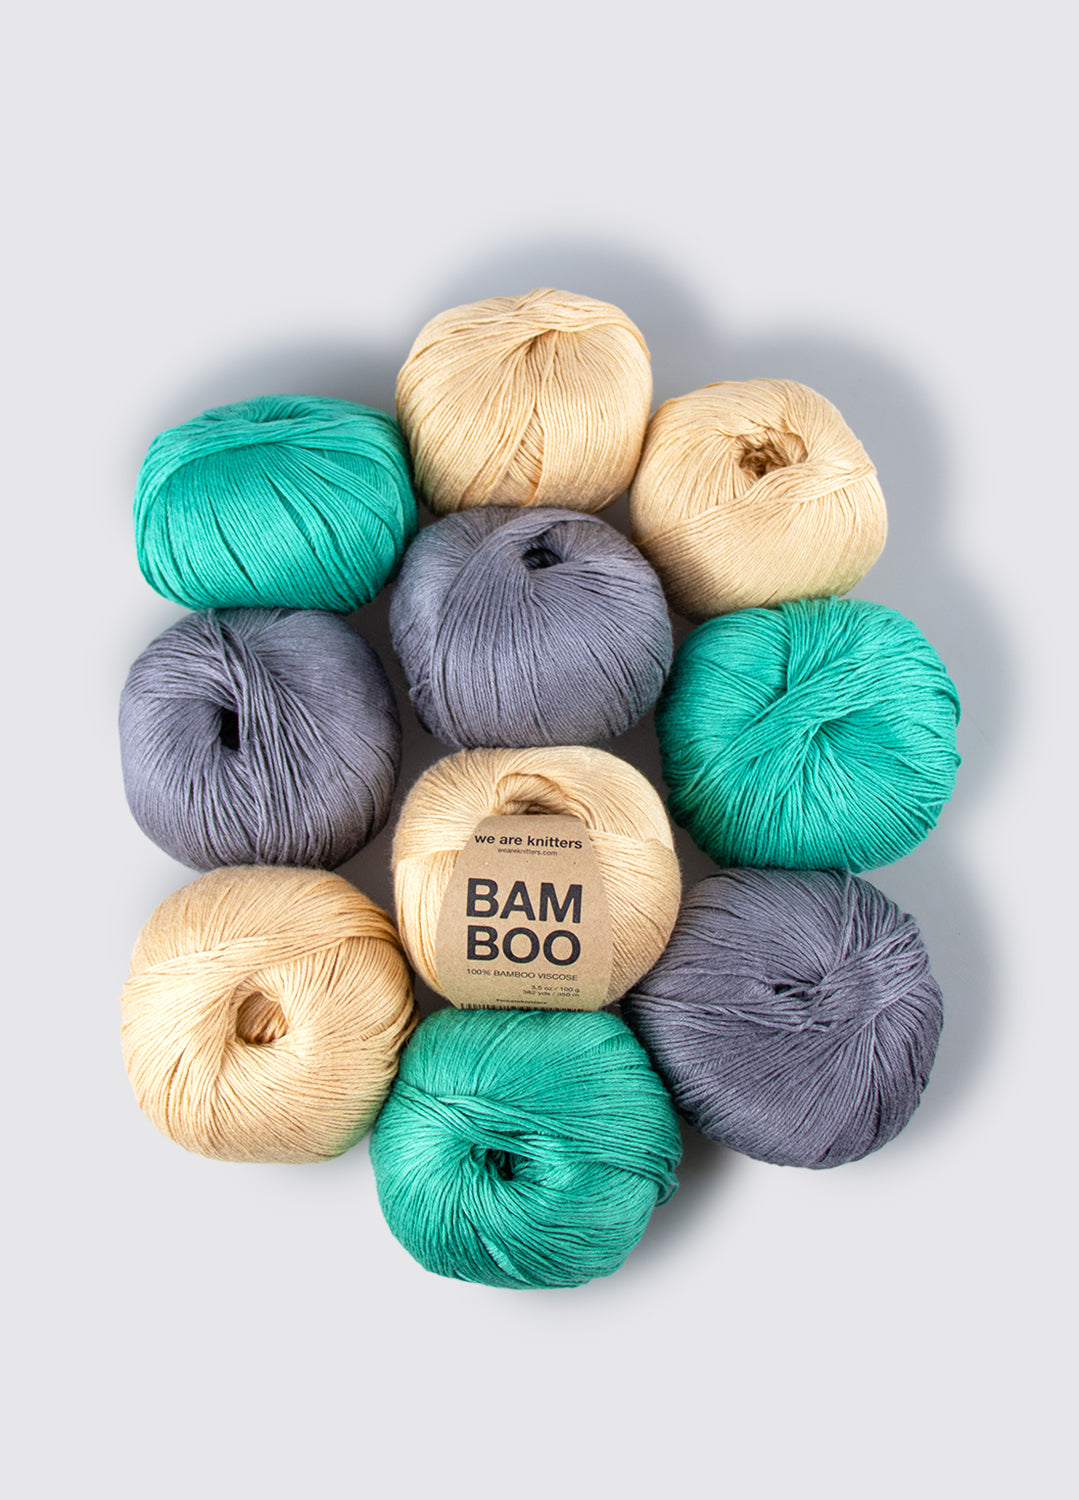 10 Pack of Bamboo Yarn Balls